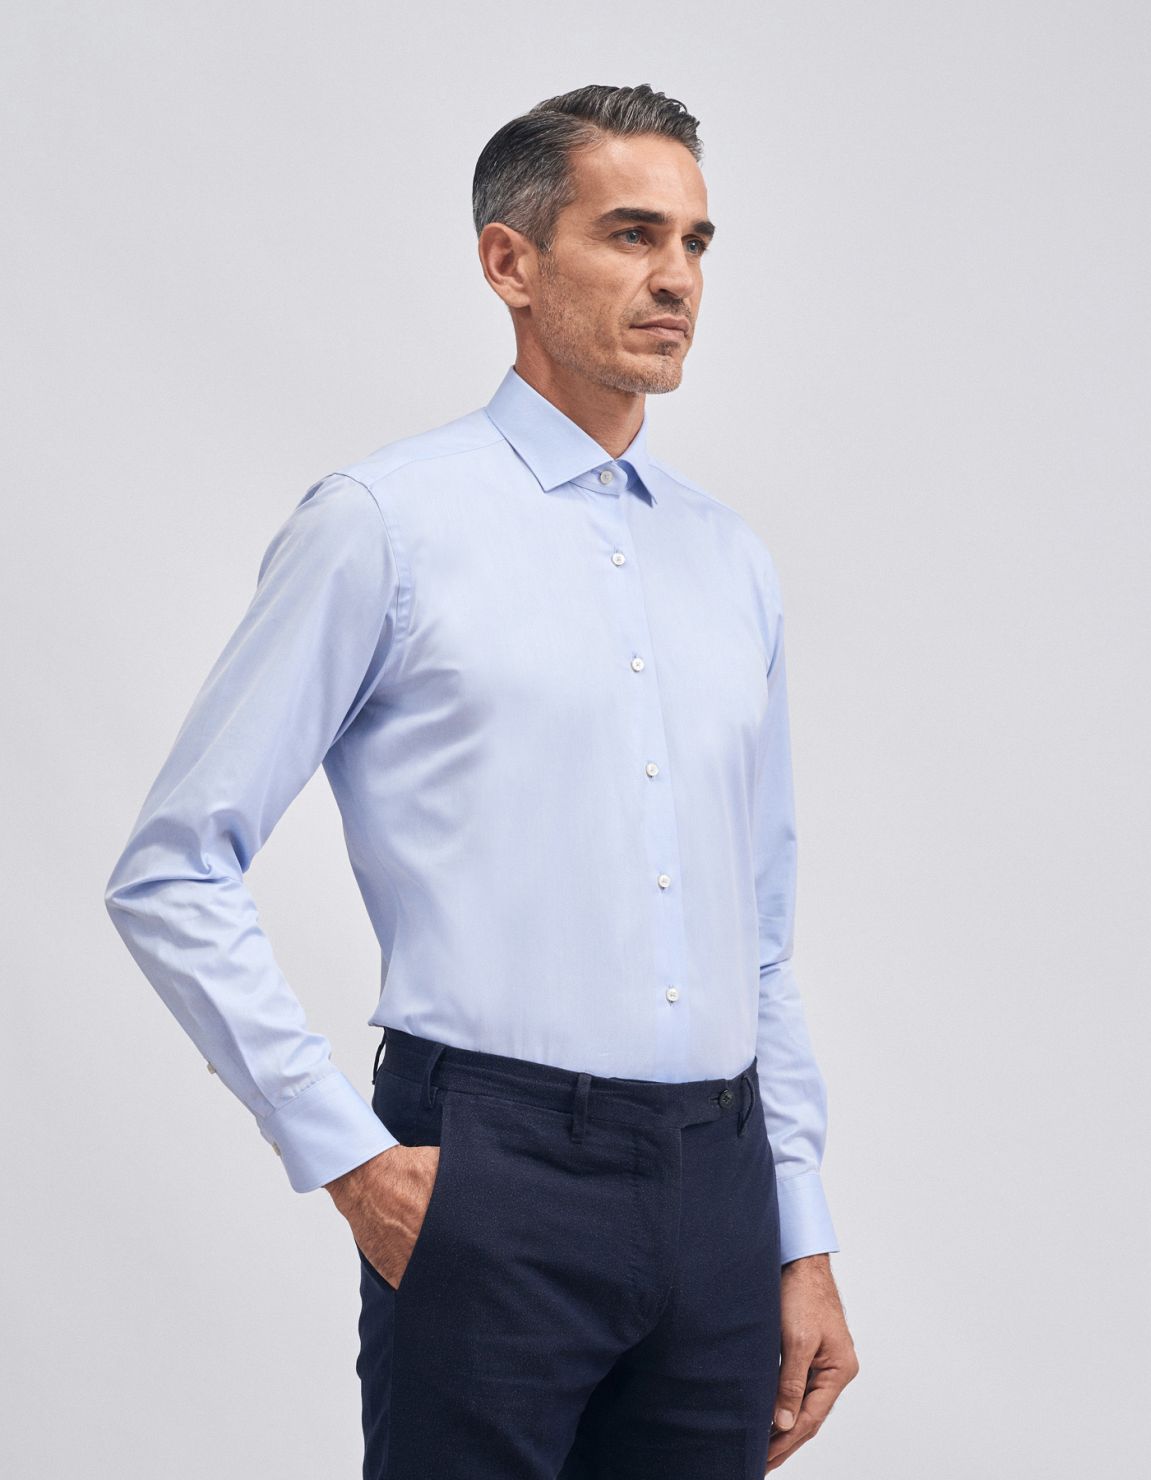 Shirt Collar small cutaway Light Blue Twill Tailor Custom Fit 1